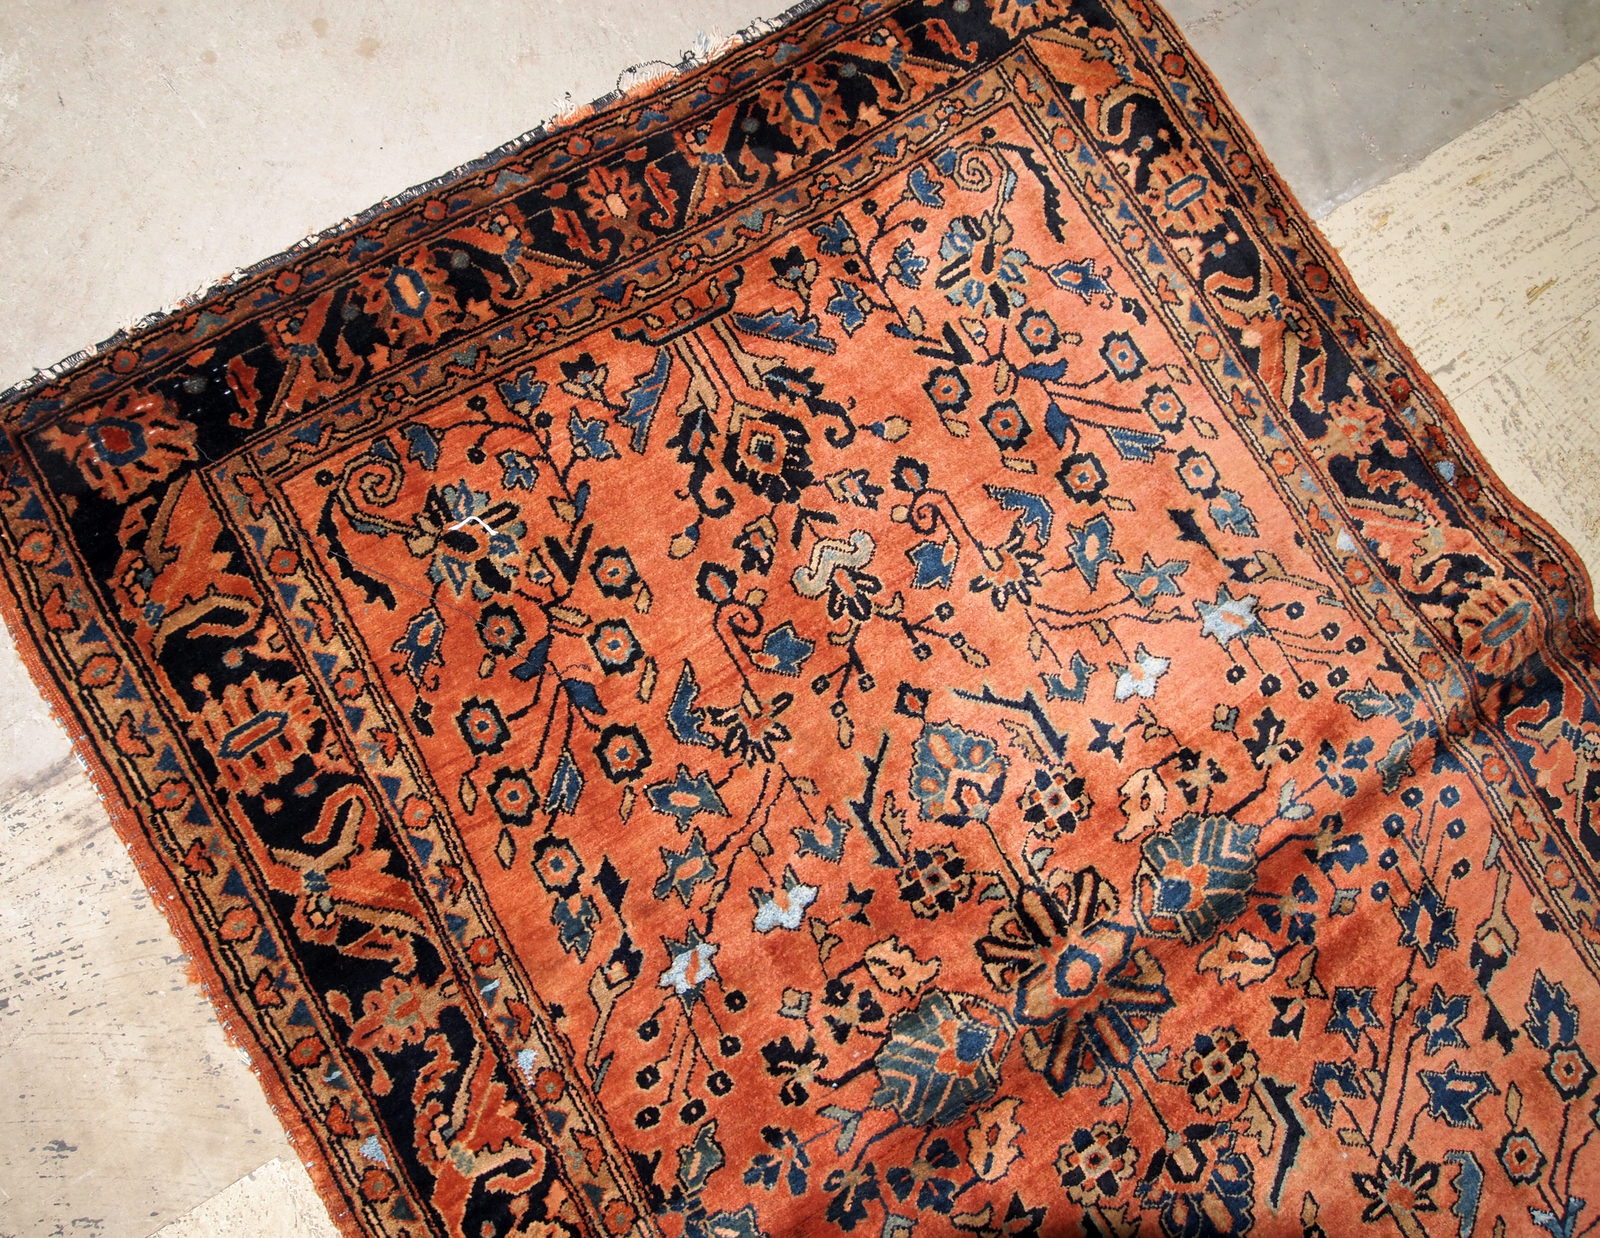 Handmade antique Sarouk rug in original good condition from 1920s. 